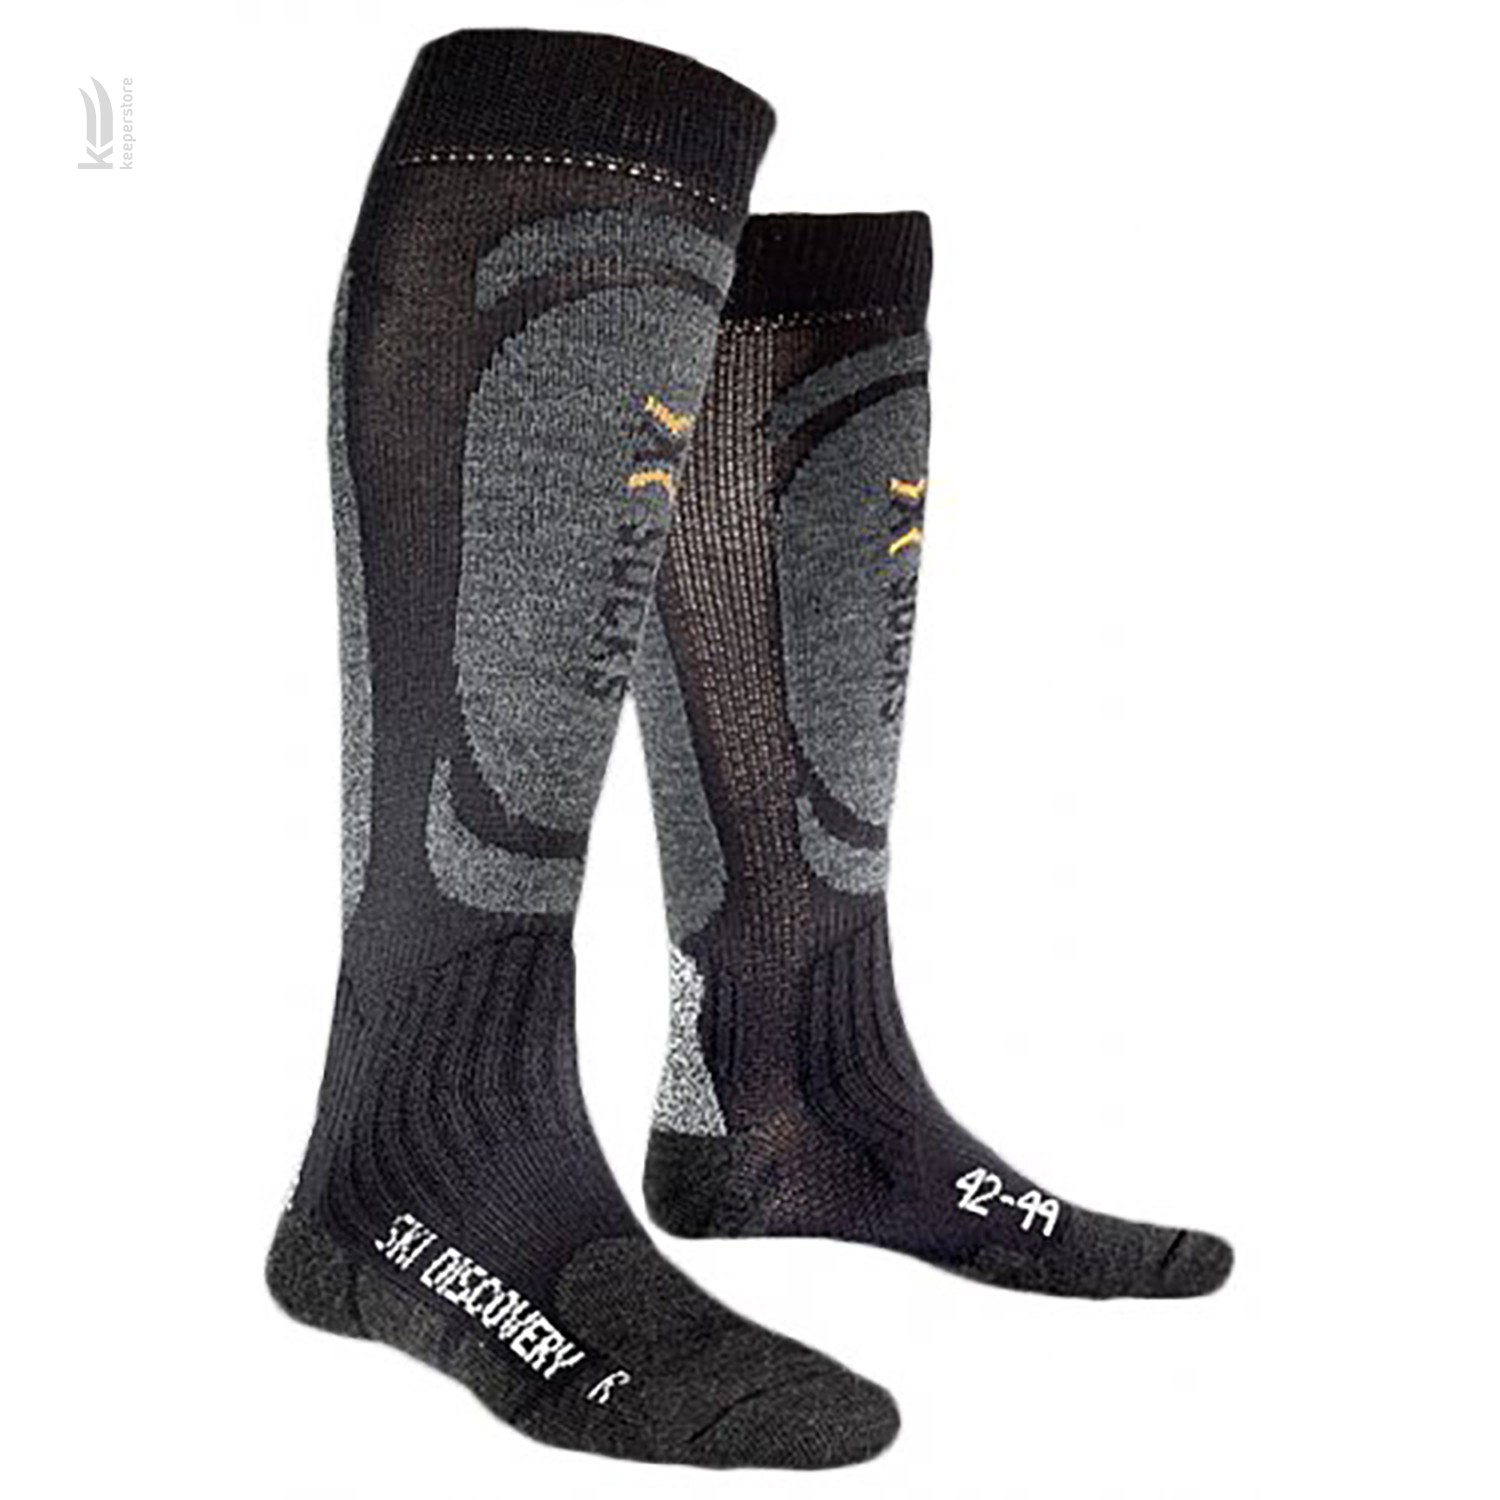 Шерстяные носки X-Socks Ski Discovery Black / Anthracite (45-47)